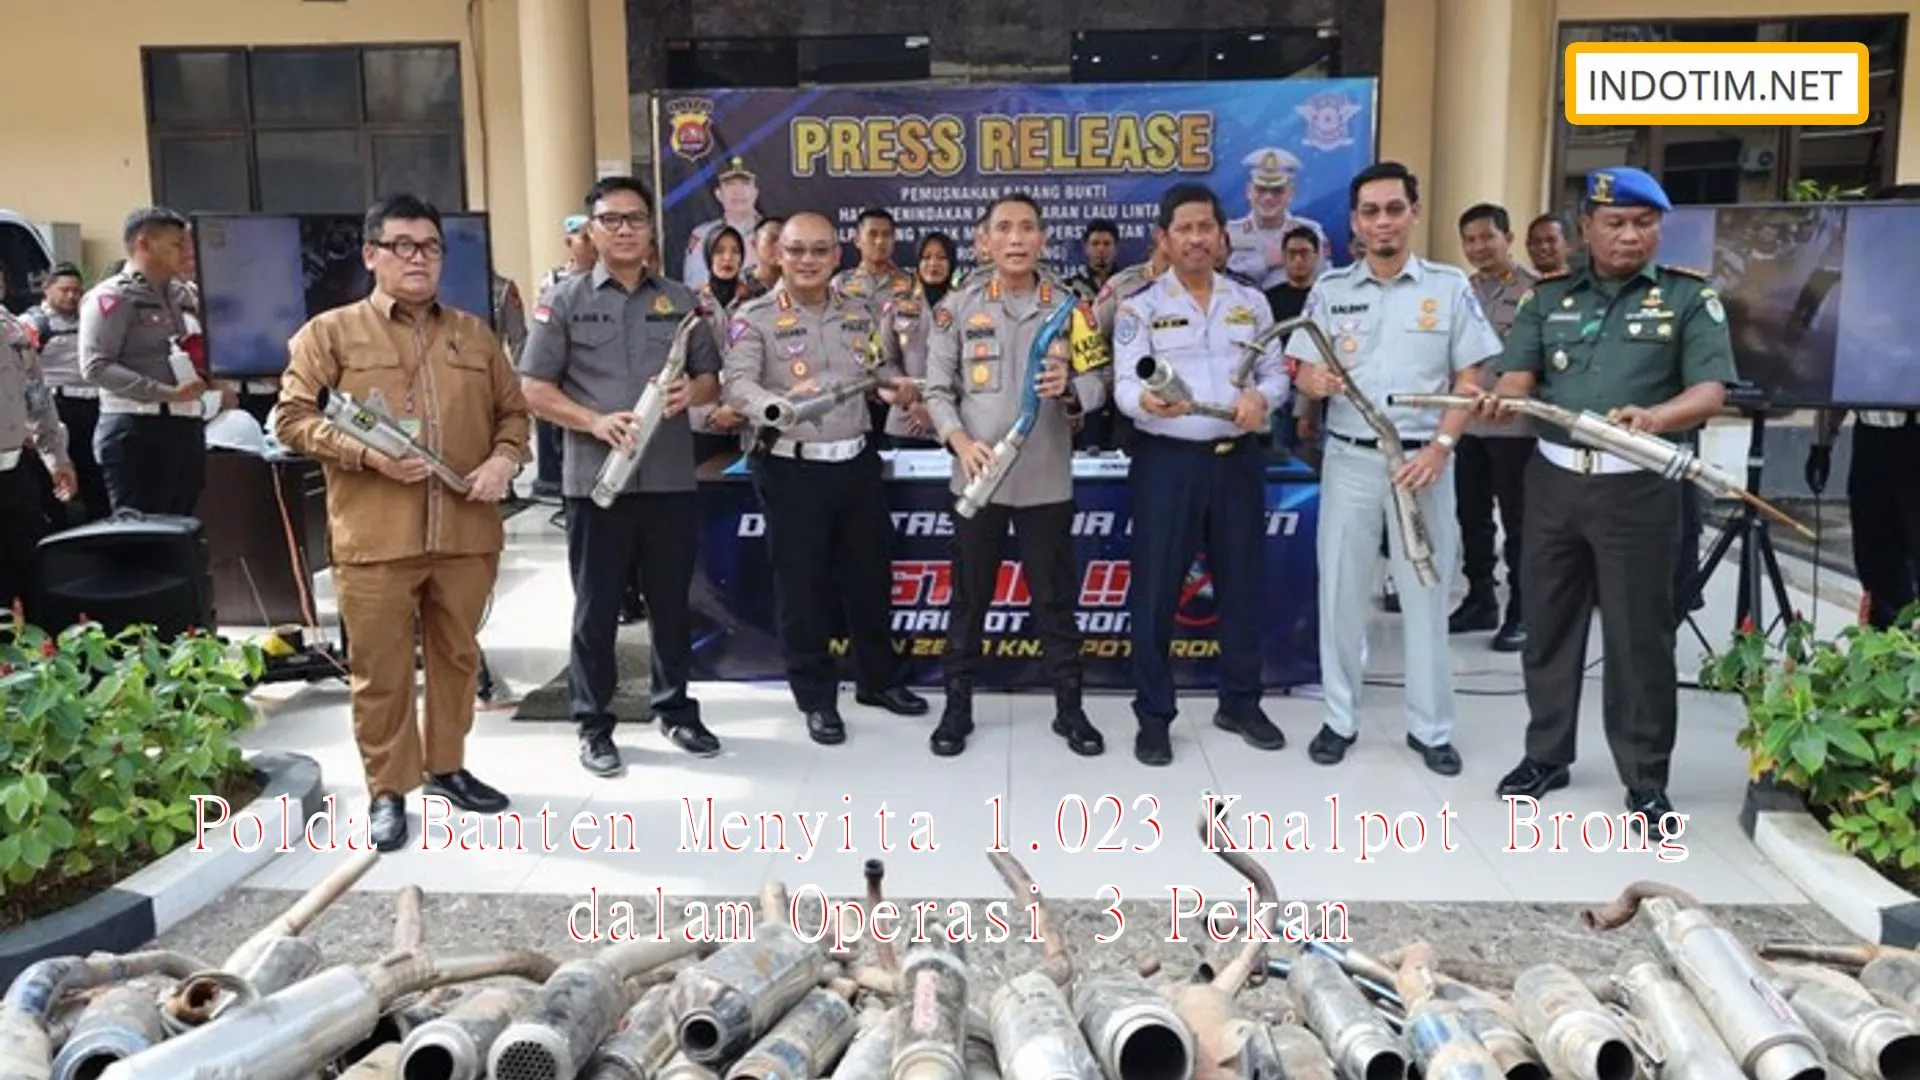 Polda Banten Menyita 1.023 Knalpot Brong dalam Operasi 3 Pekan